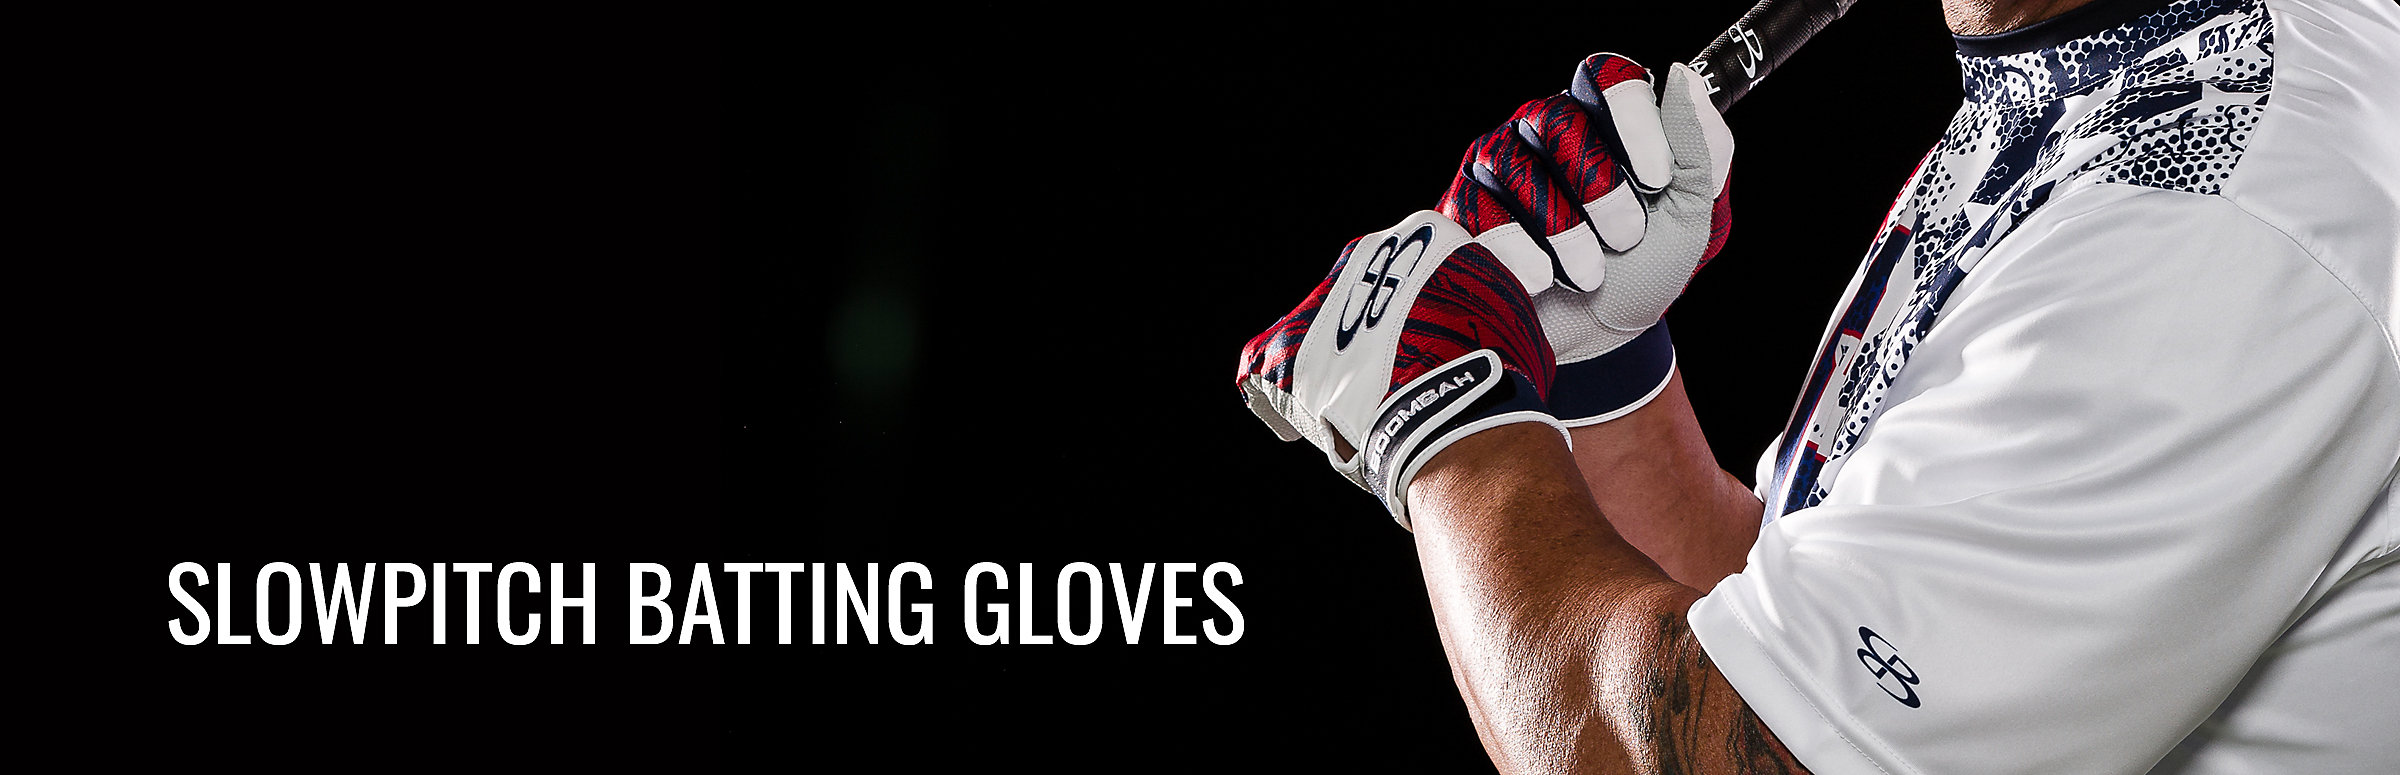 Softball Batting Gloves